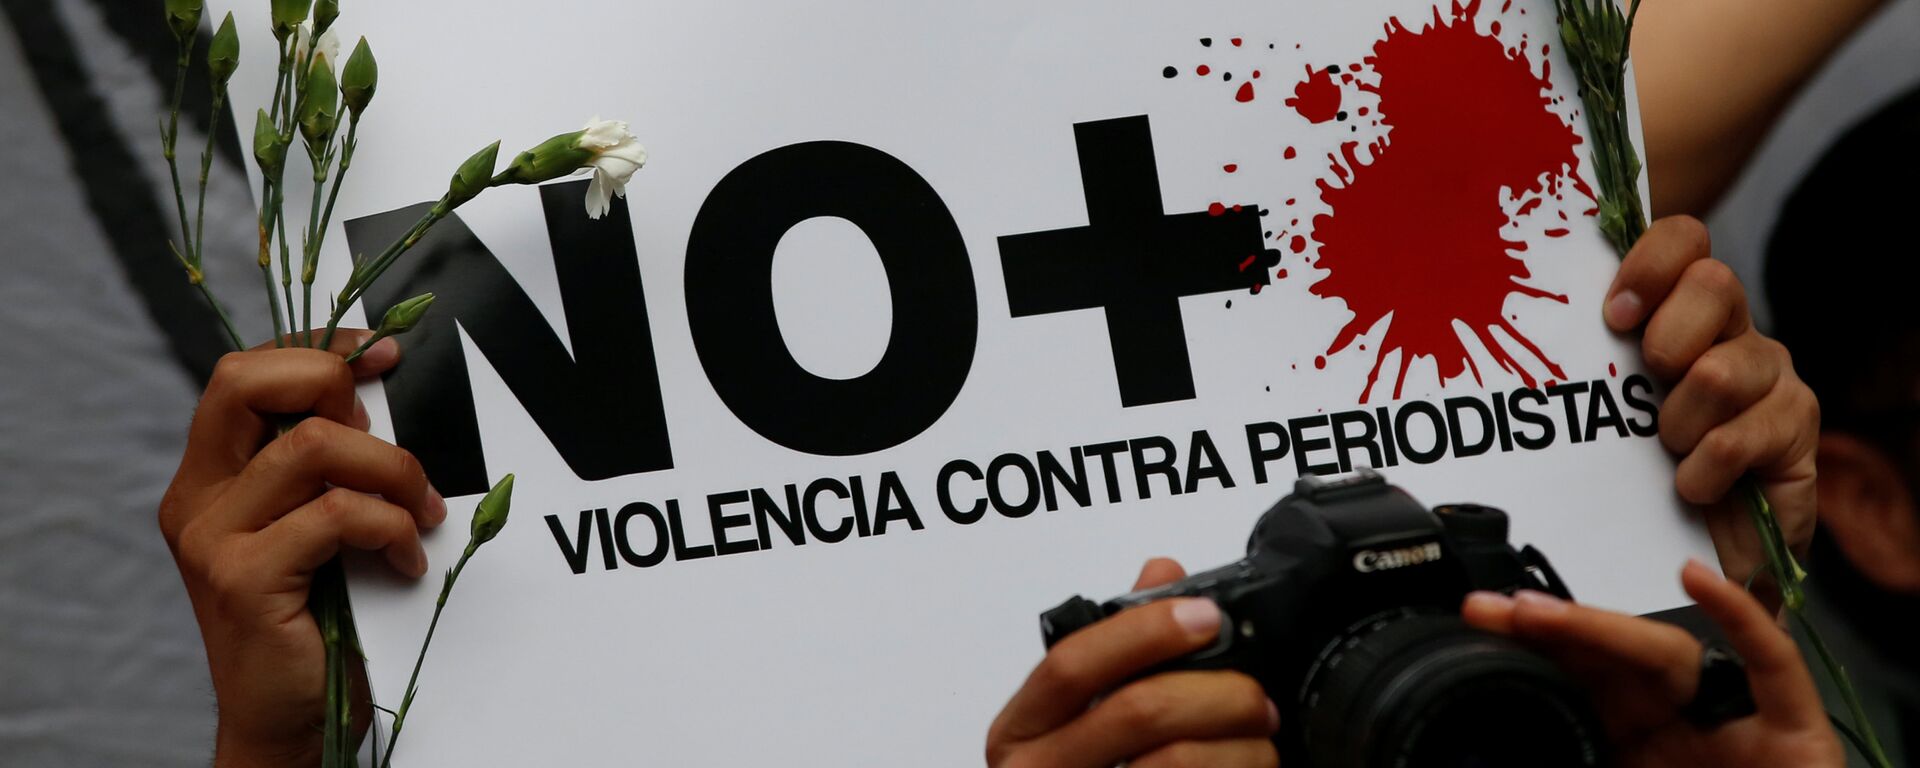 Protesta contra violencia contra periodistas en México - Sputnik Mundo, 1920, 06.04.2022